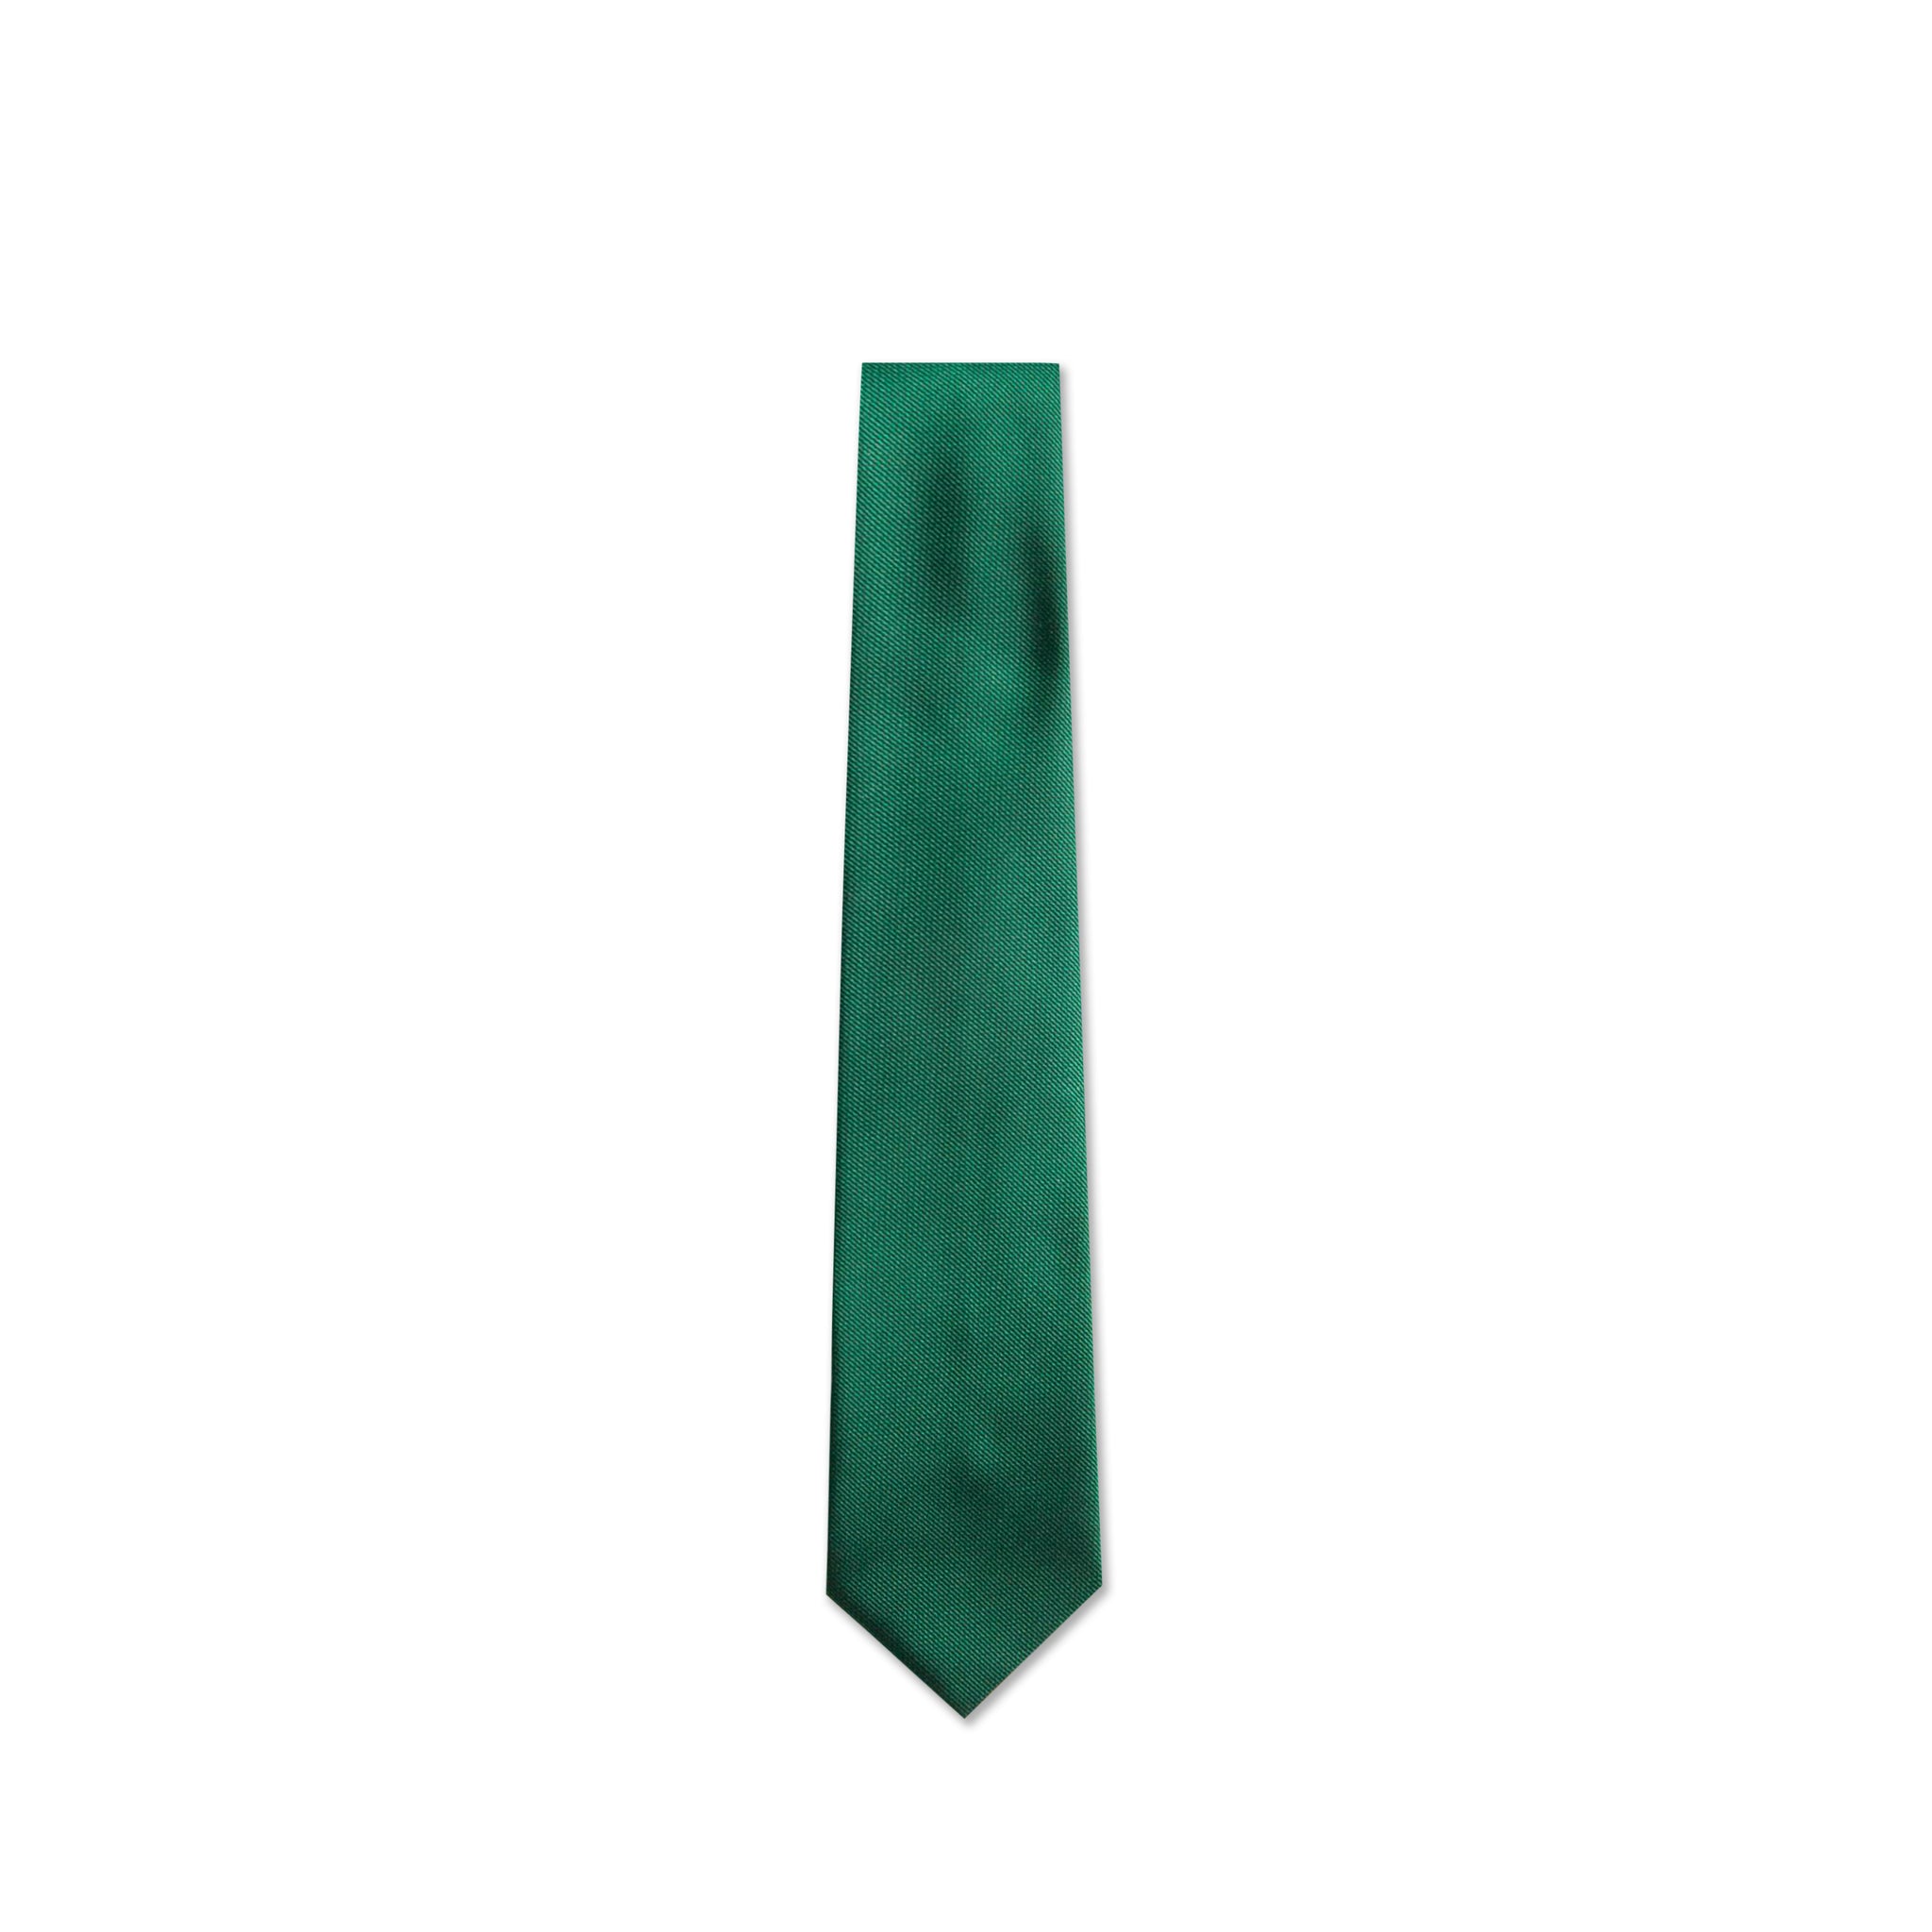 Solid Bright Green Silk Tie